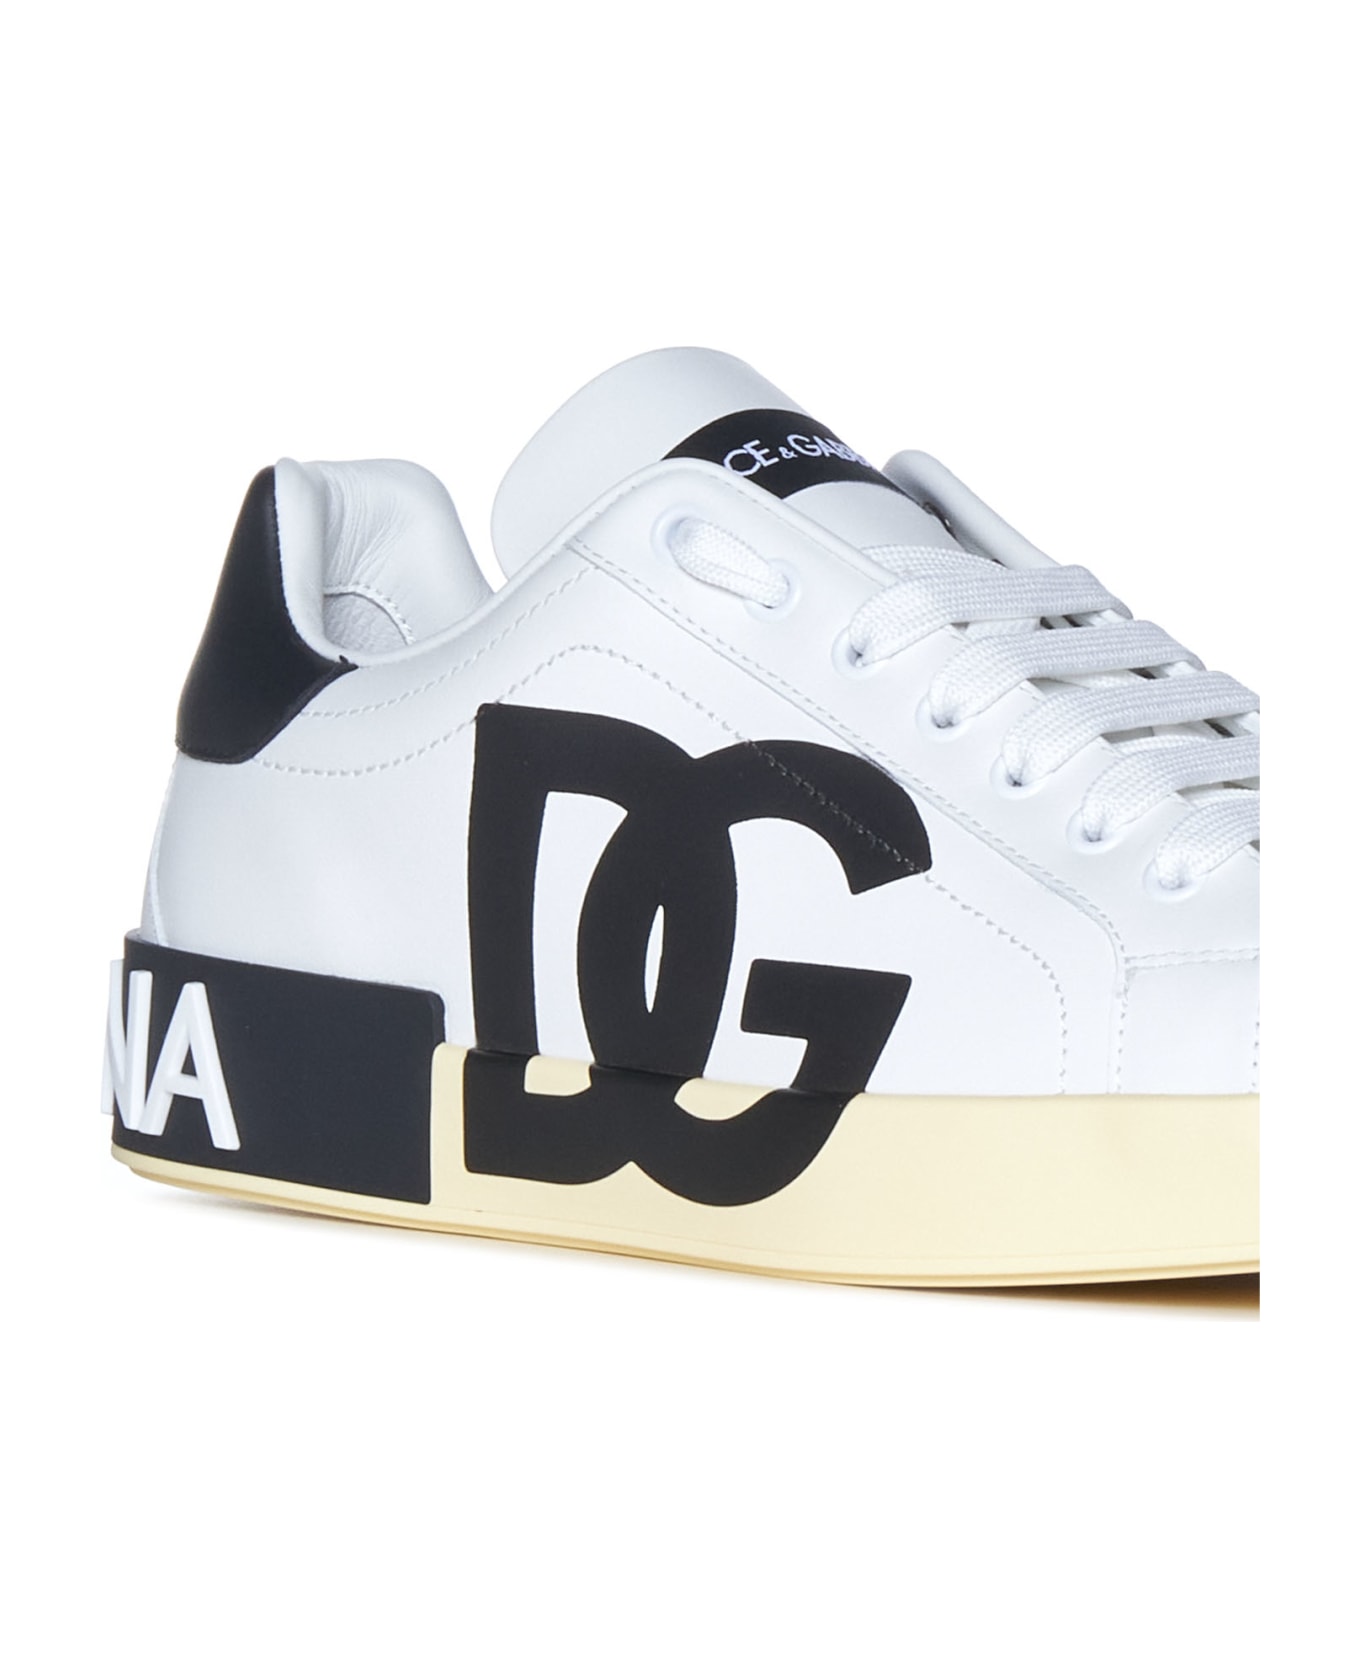 Sneakers Steven 5777 Portofino Nappa Sneaker With Printed Dg Logo - White